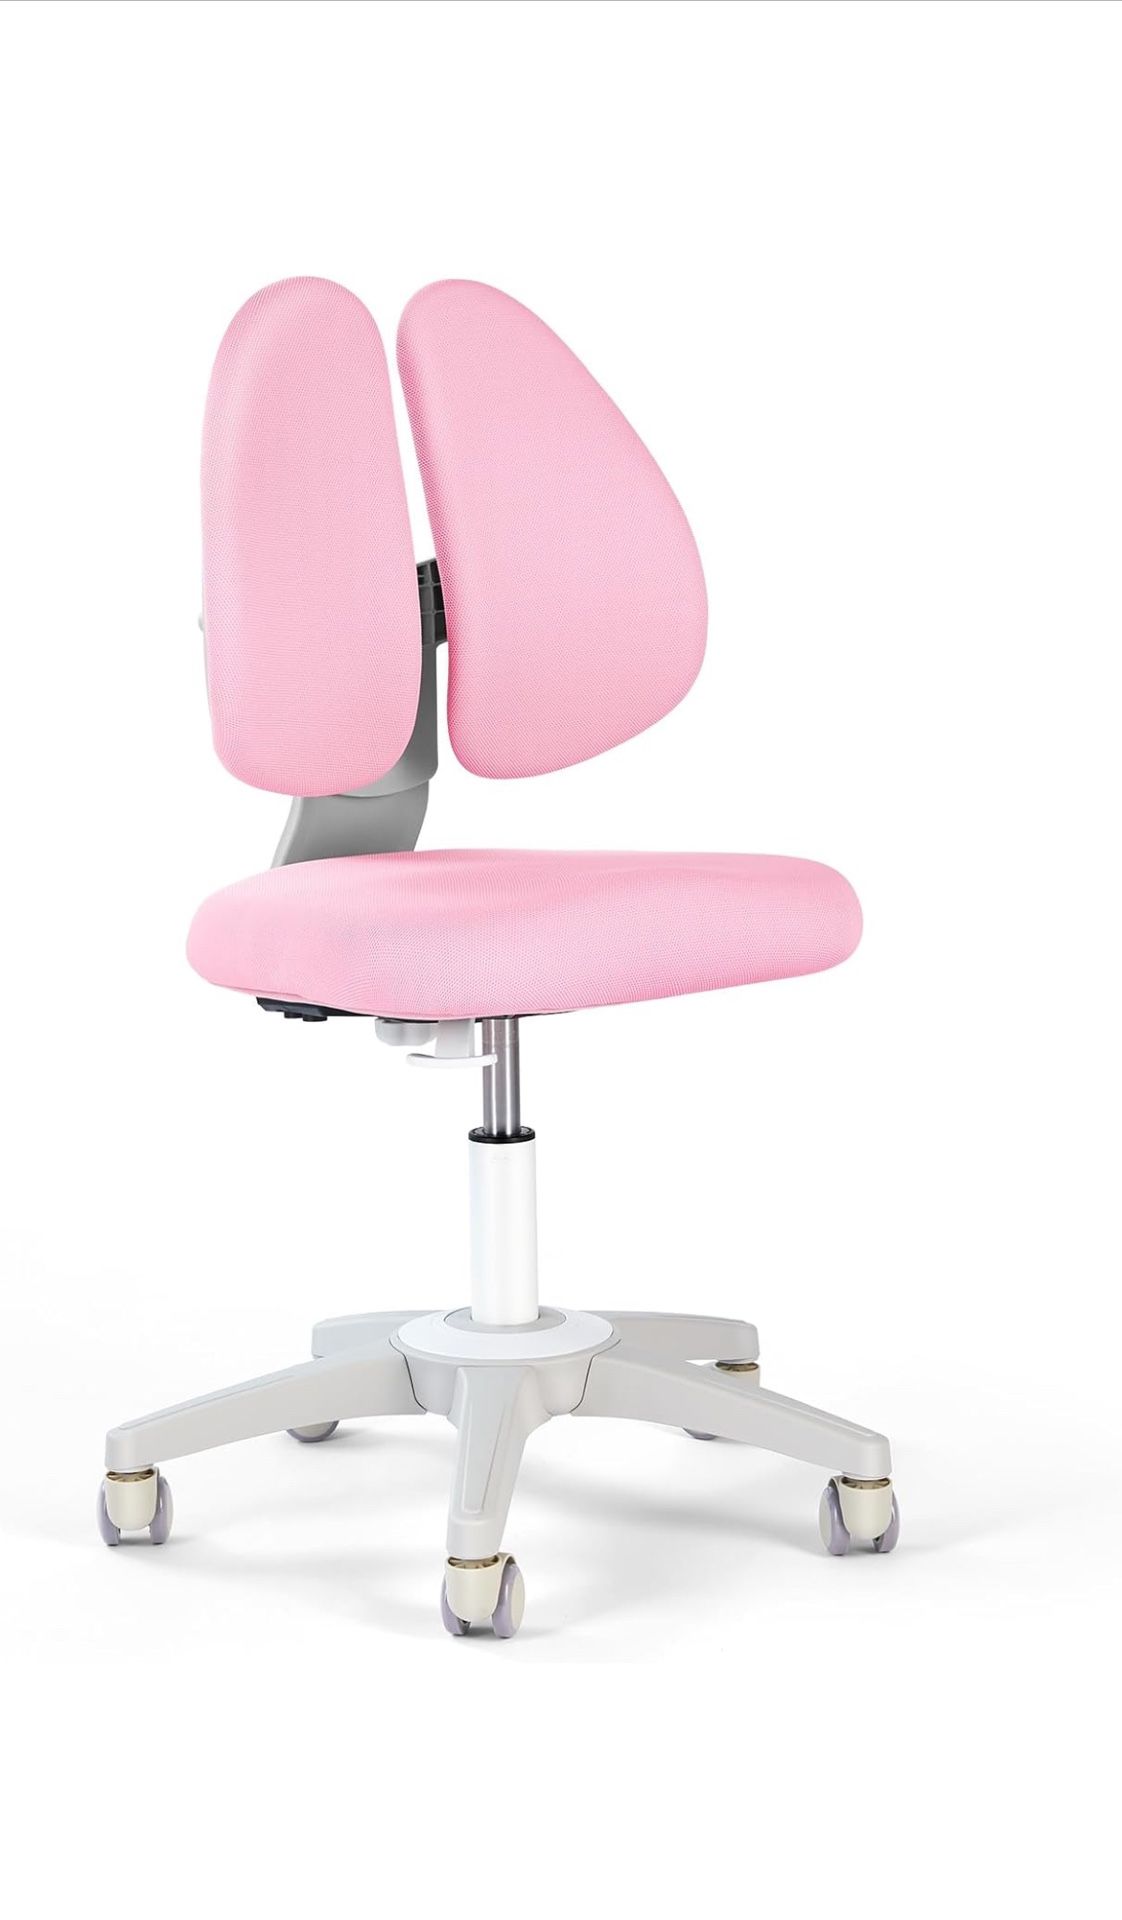 Height Depth Adjustable Kids Study Desk Chair Ergonomic 360° Computer Chair Pink